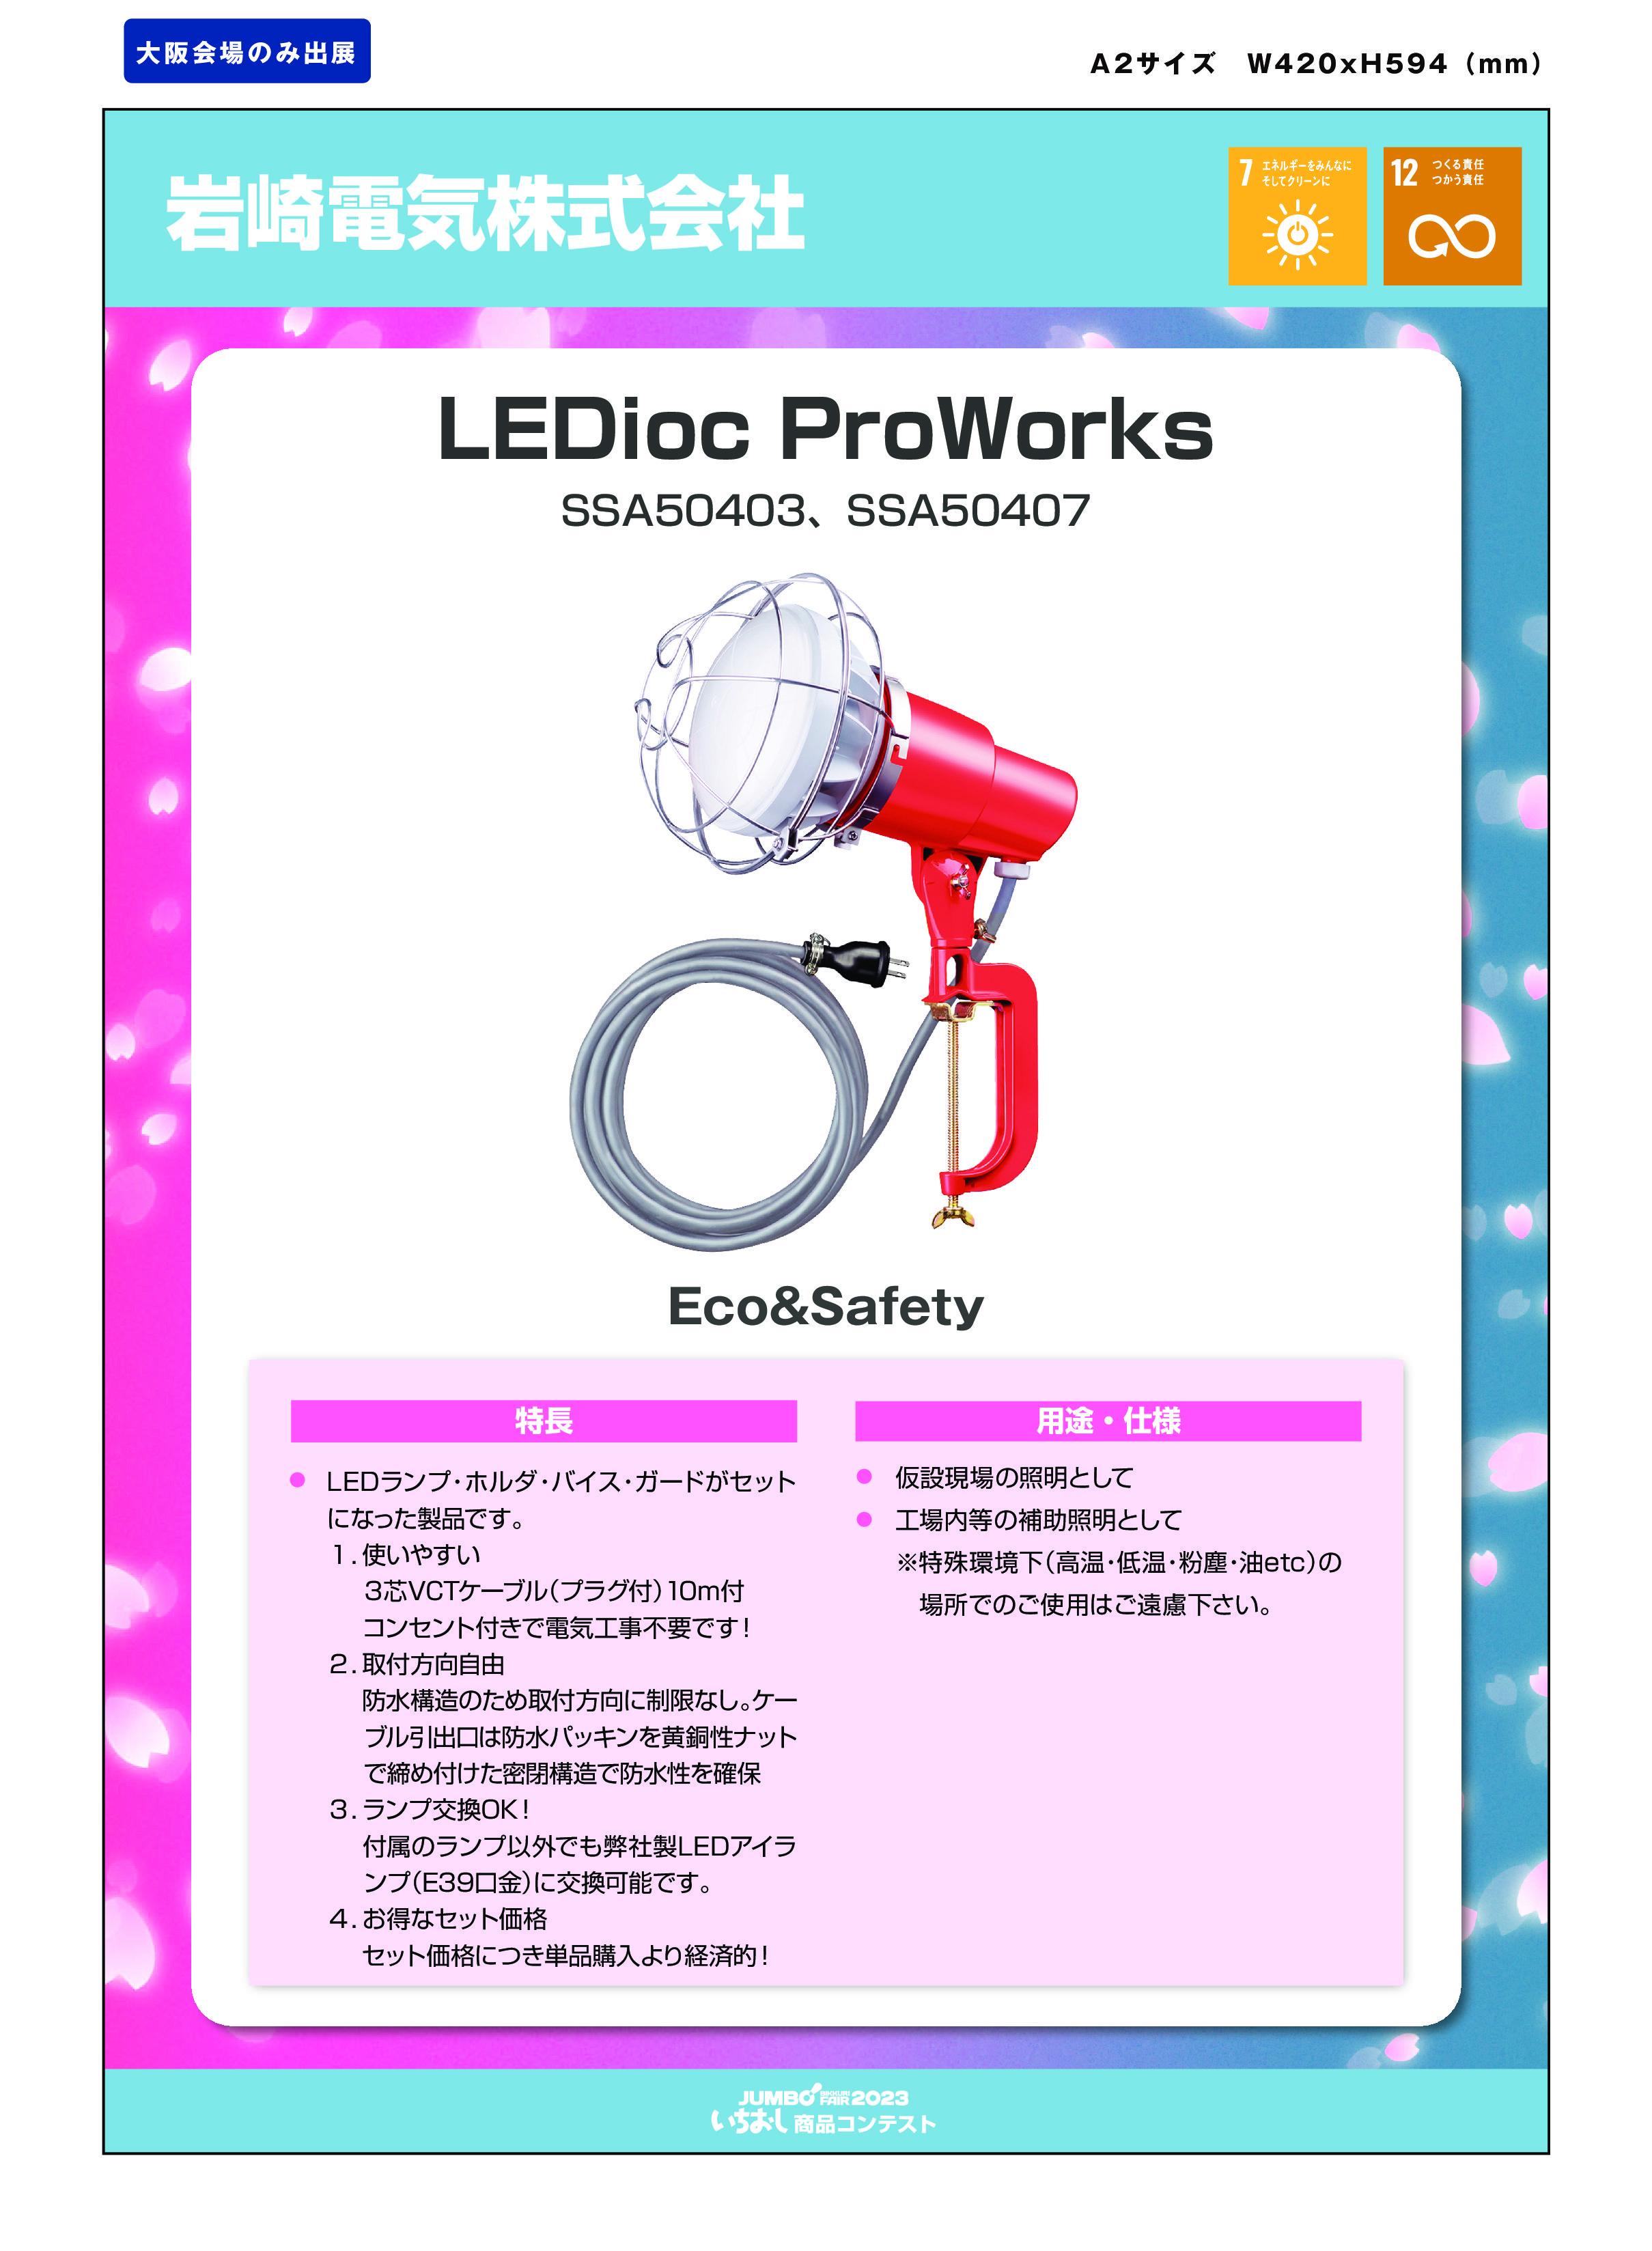 「LEDioc ProWorks」岩崎電気株式会社の画像